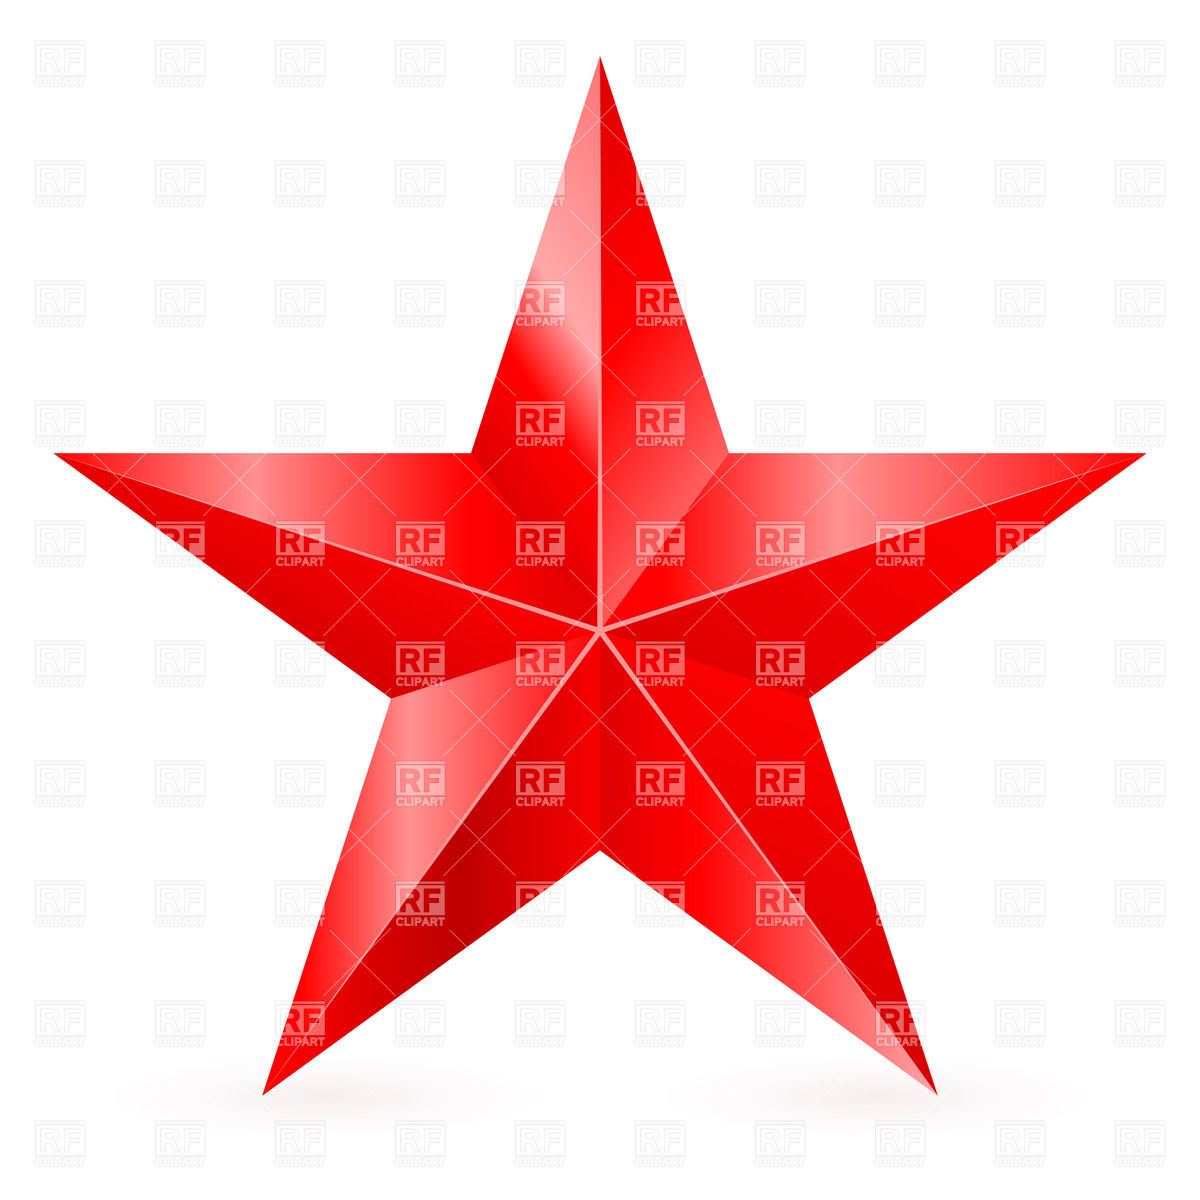 Red Star Clip Art